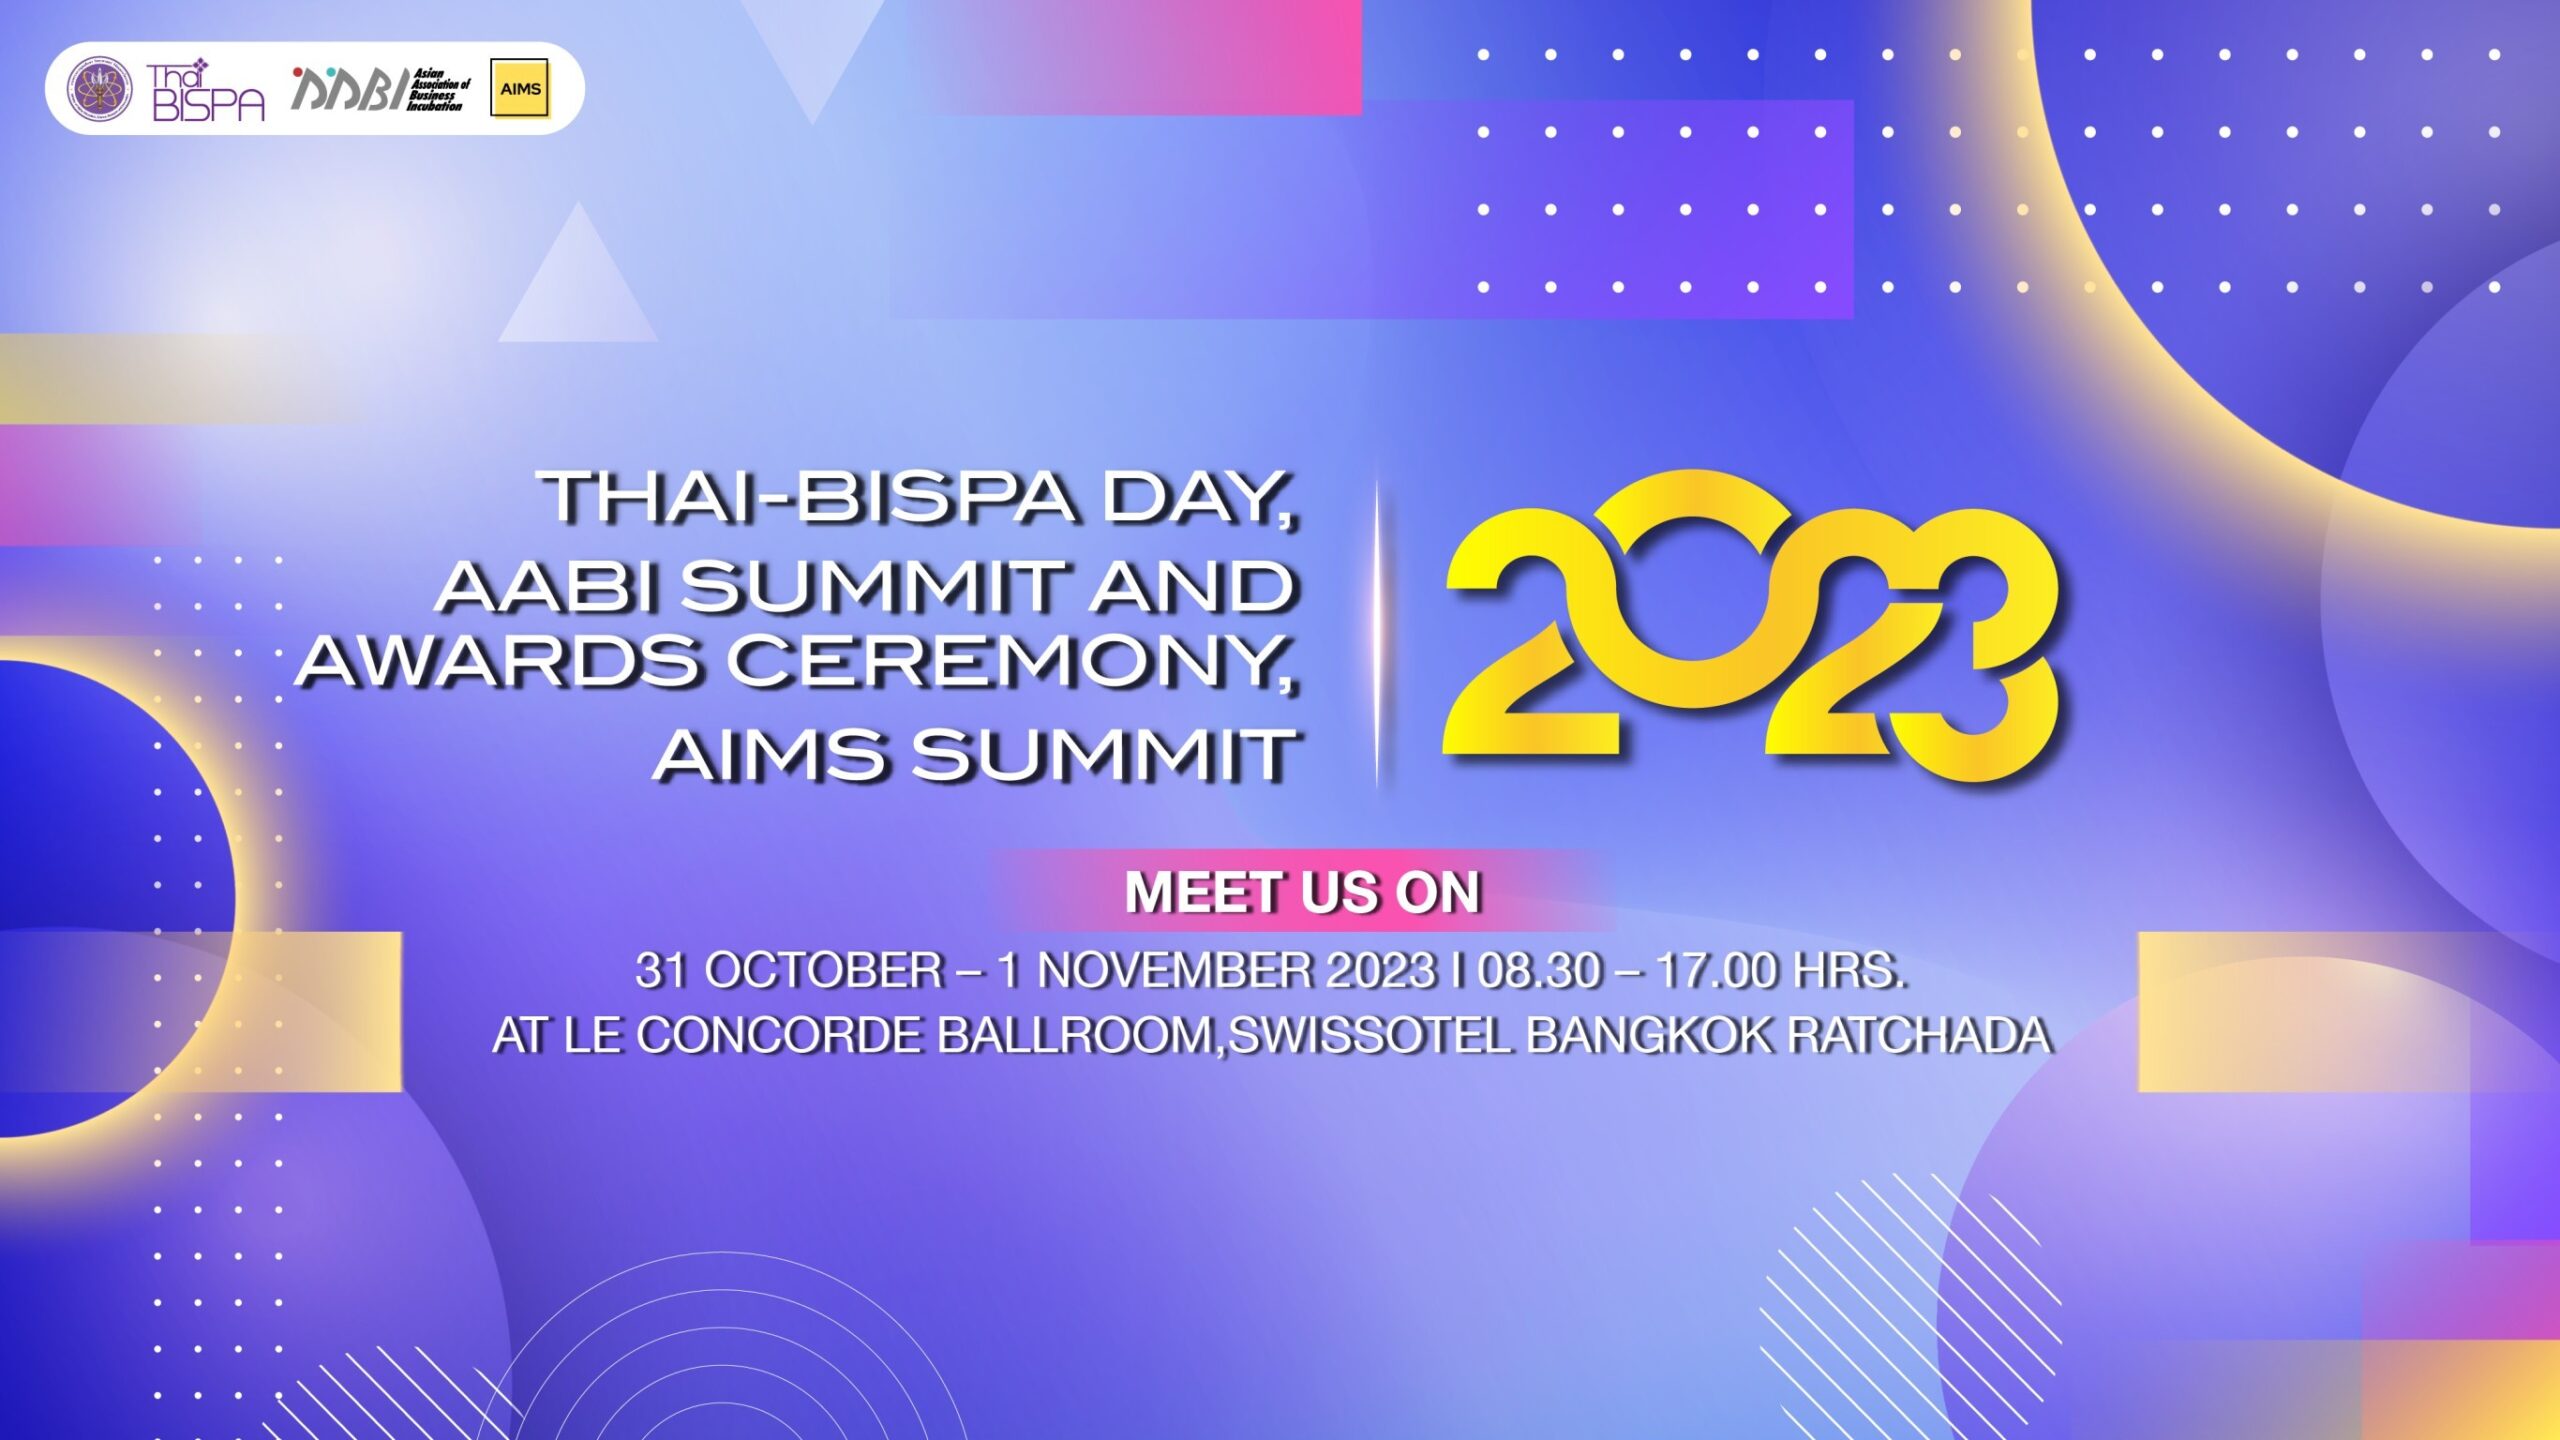 Thai-BISPA Day 2022